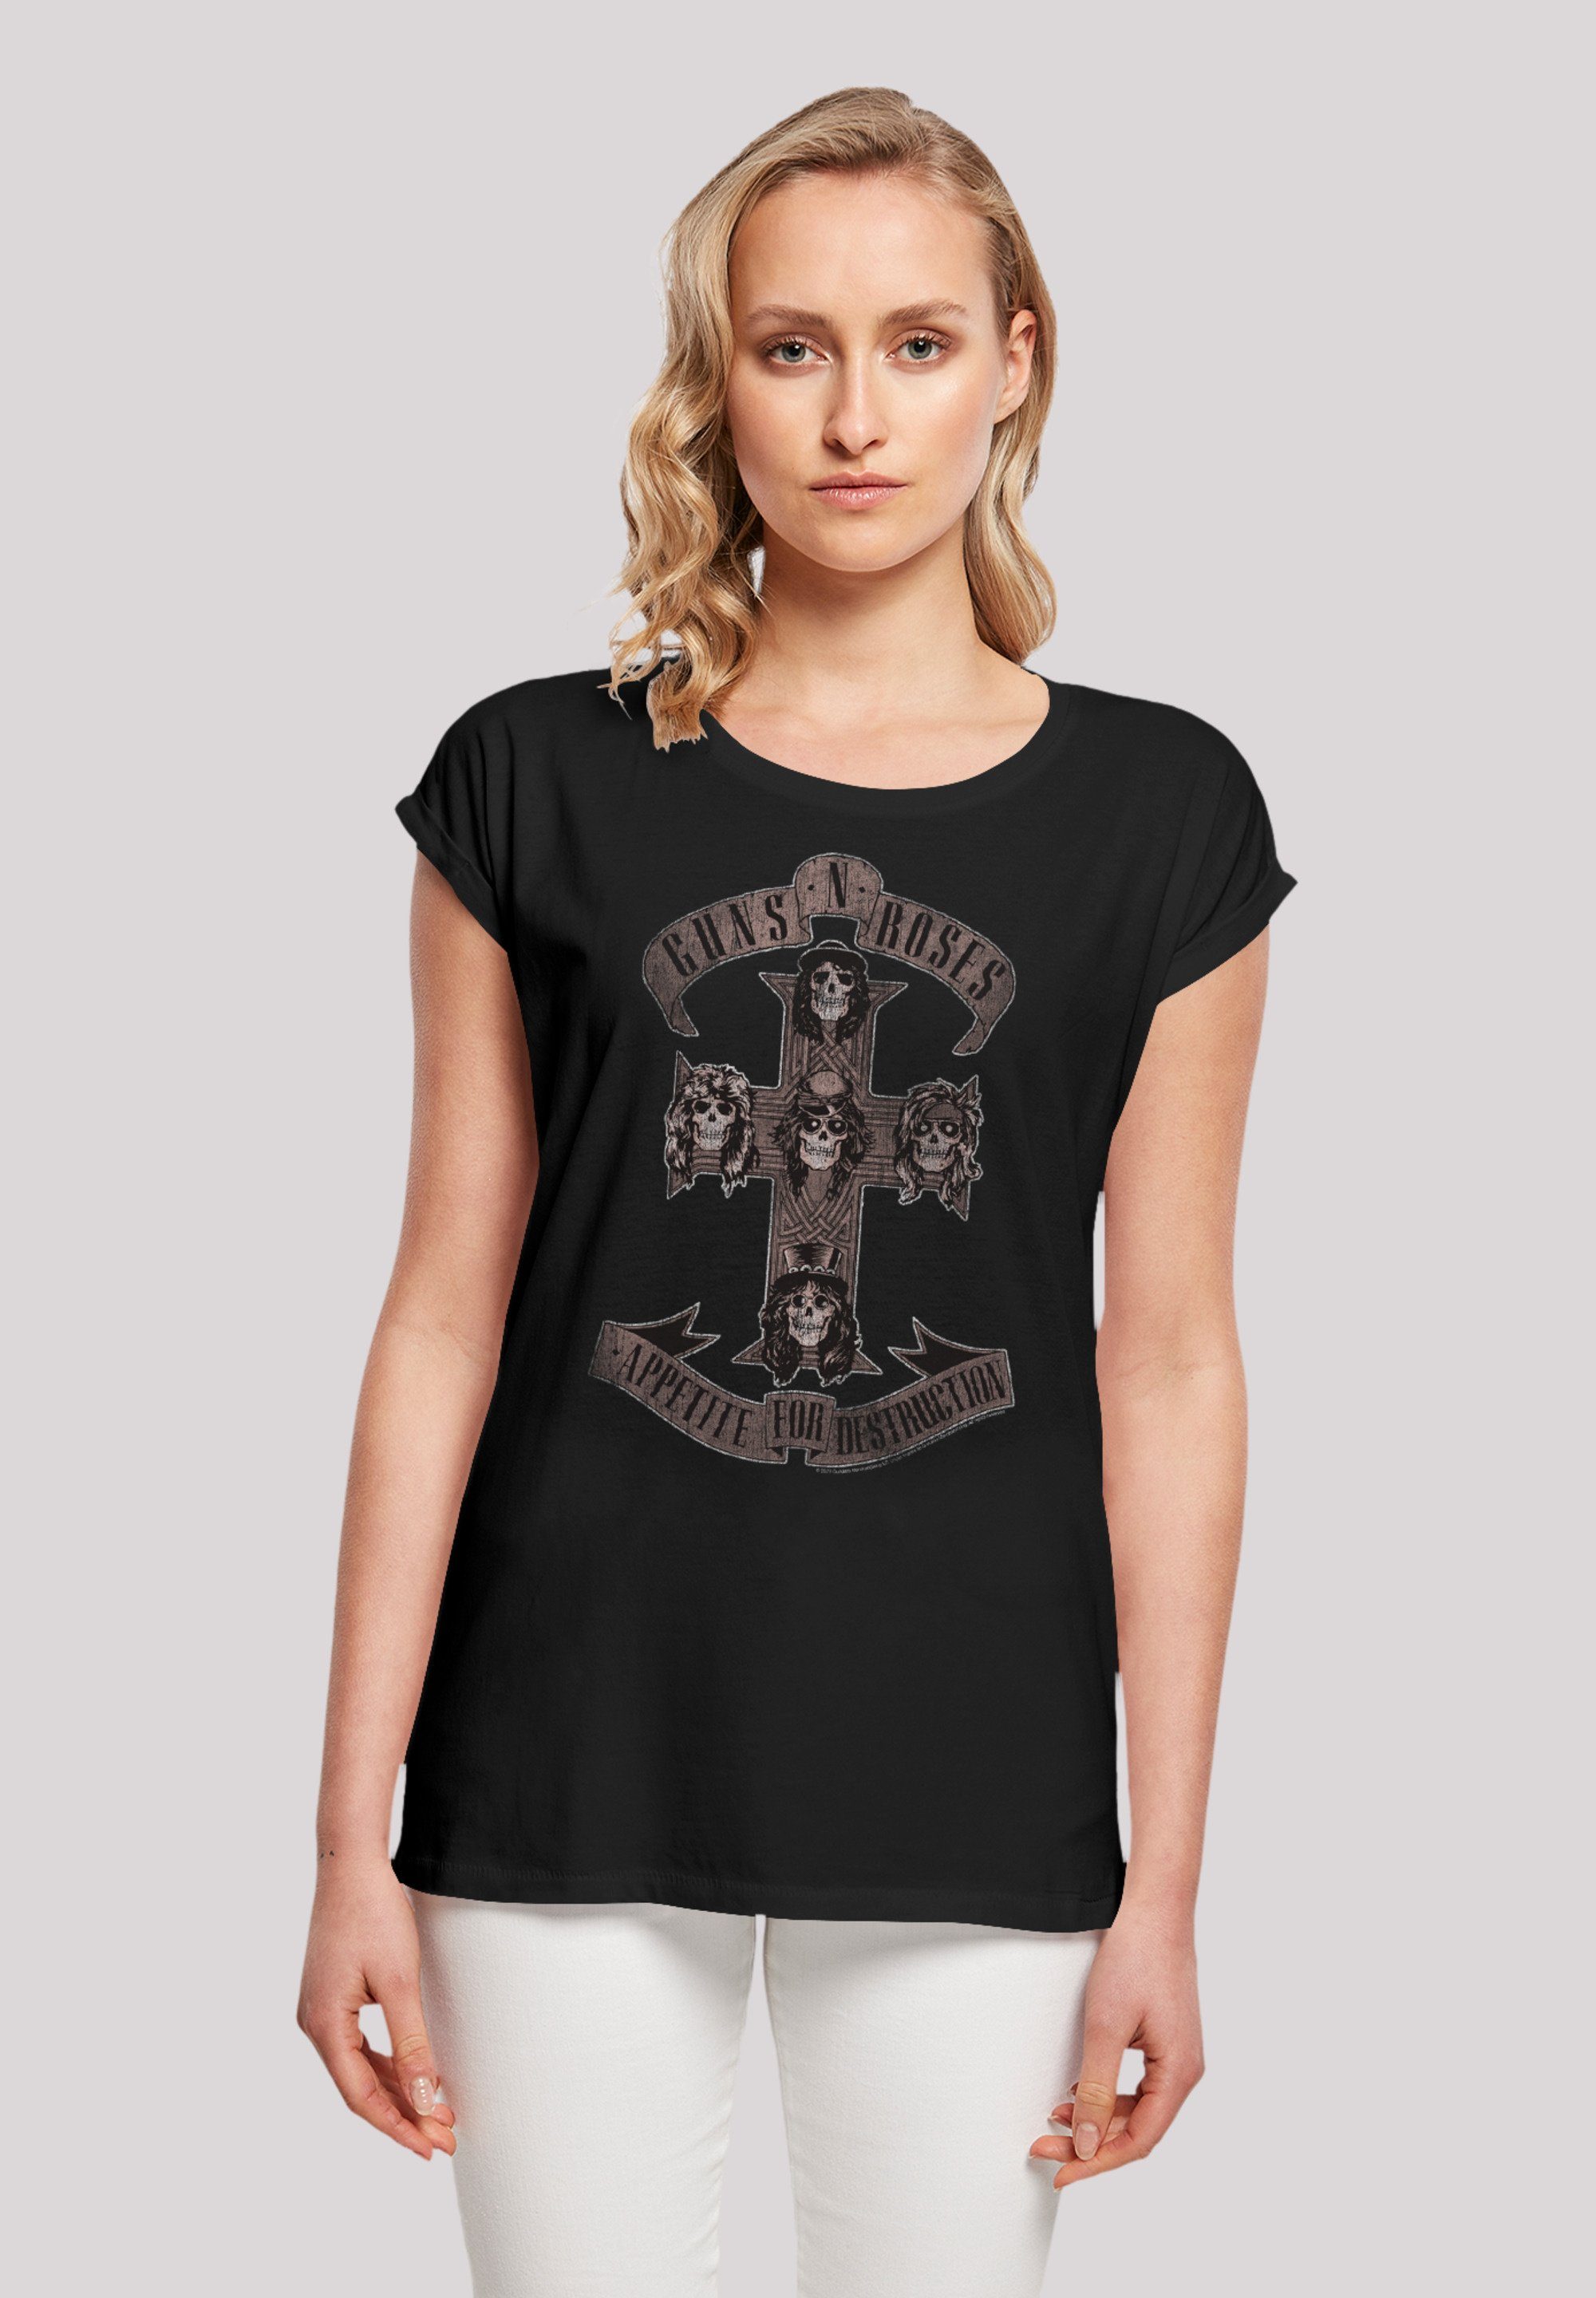 F4NT4STIC T-Shirt Guns 'n' Roses Premium Musik Hard Rock Qualität Band